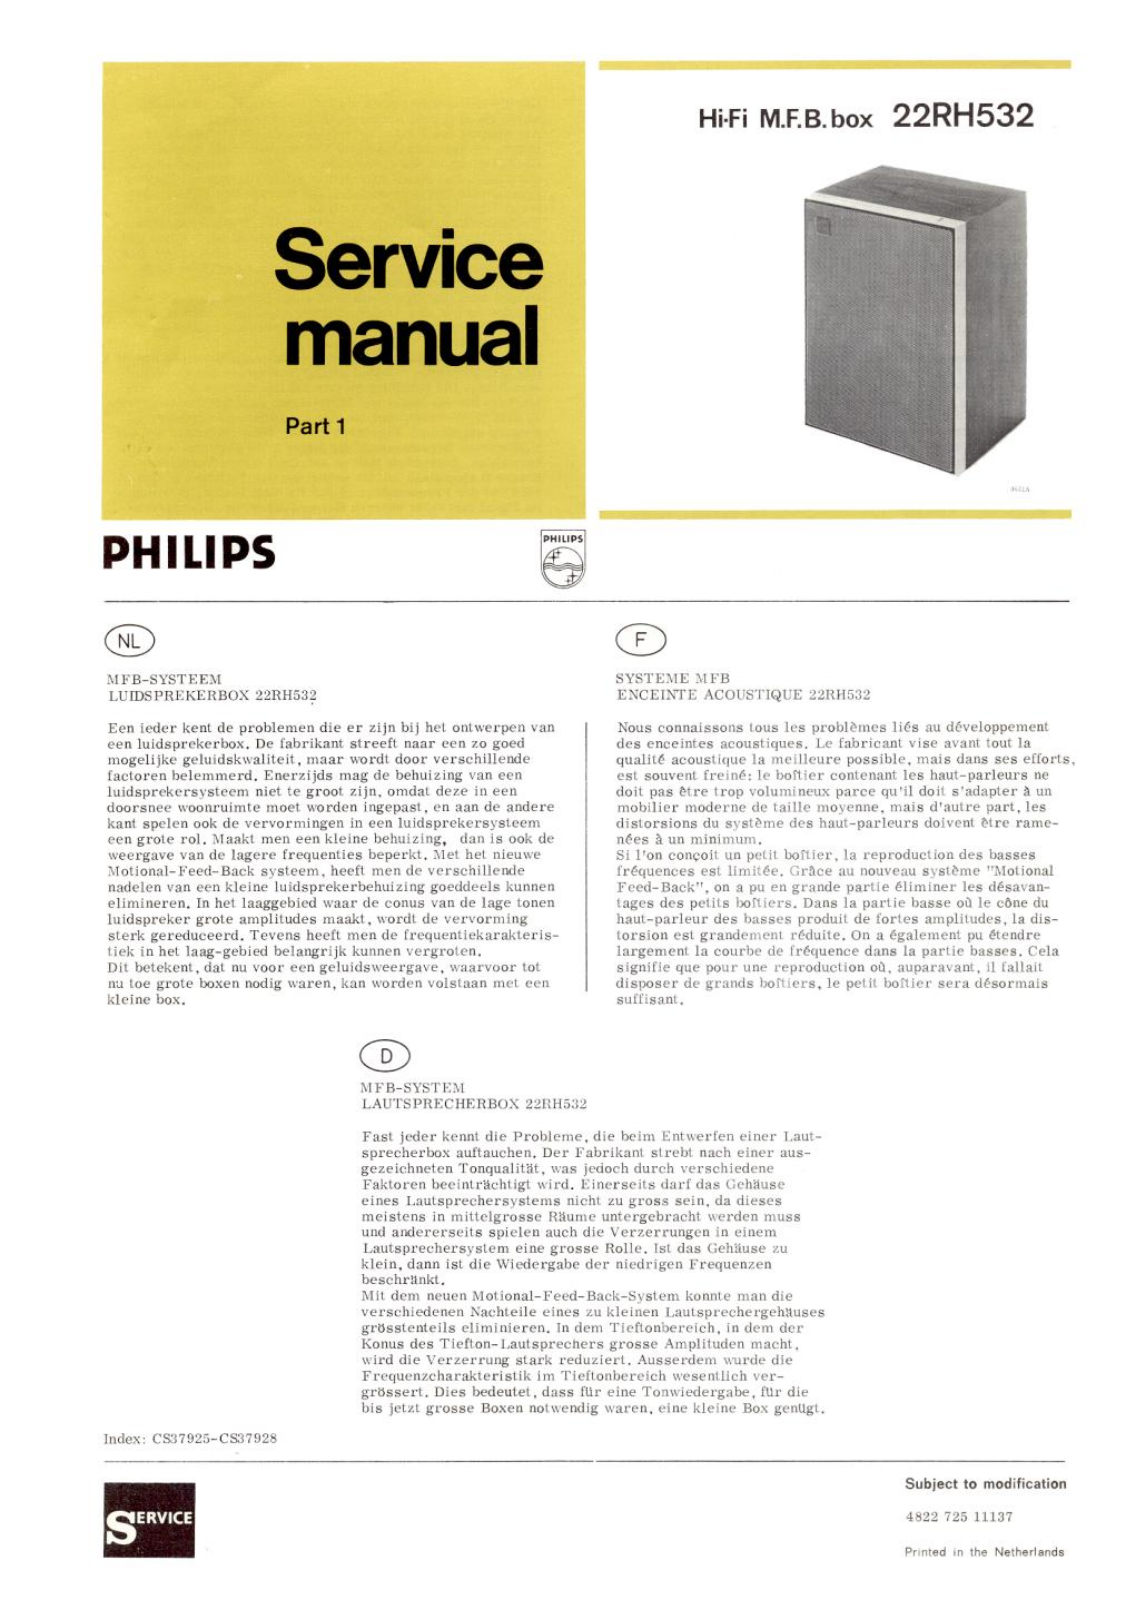 Philips 22-RH-532 Service Manual